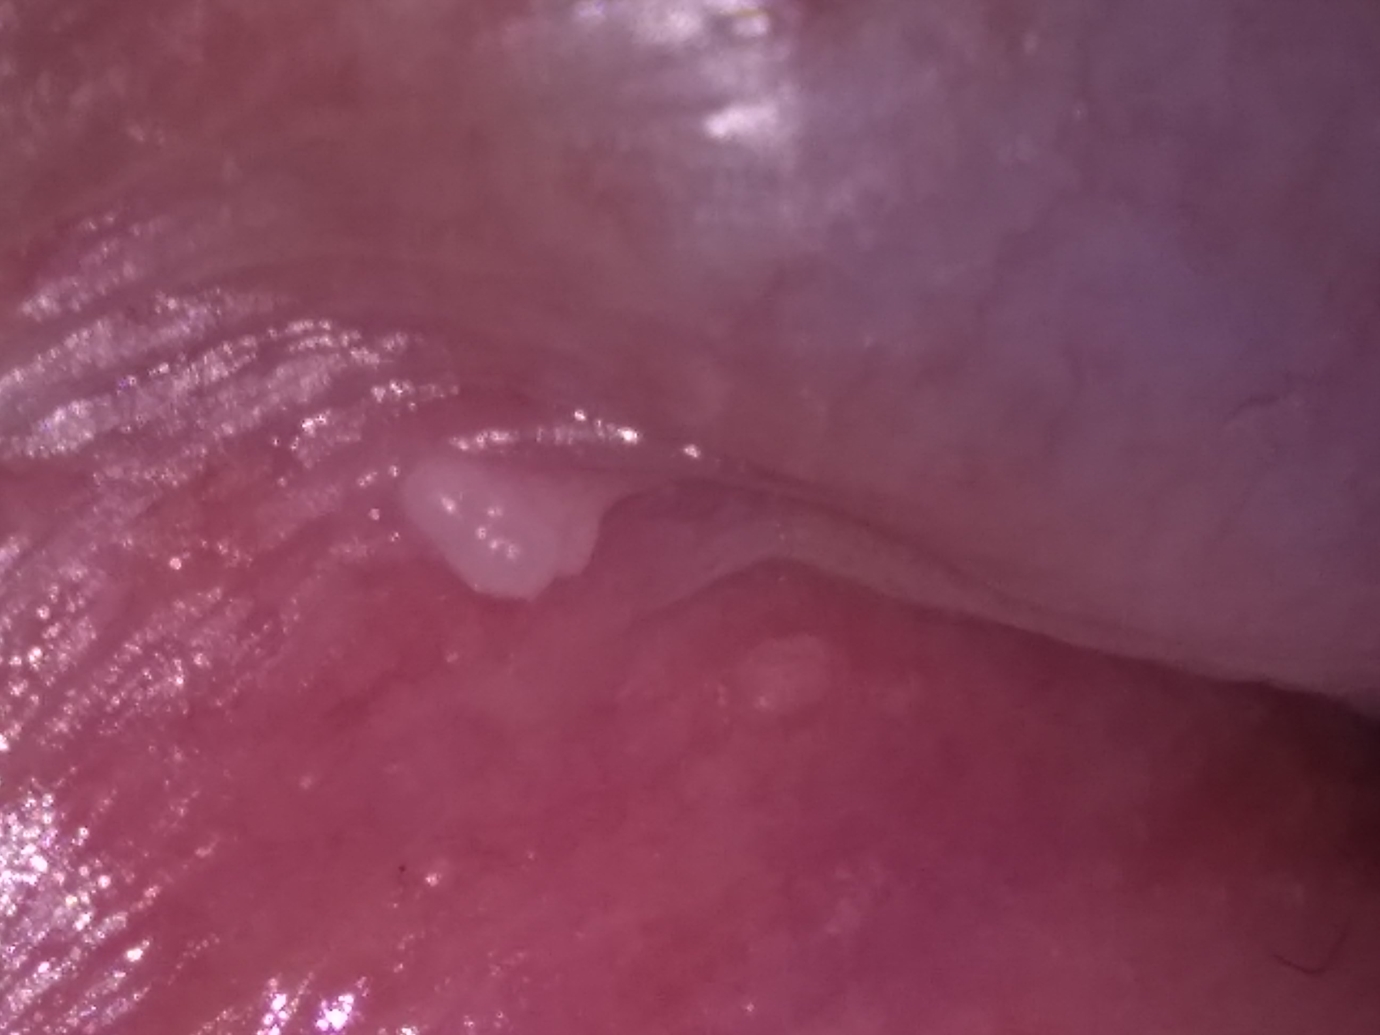 White bumps around penile shaft